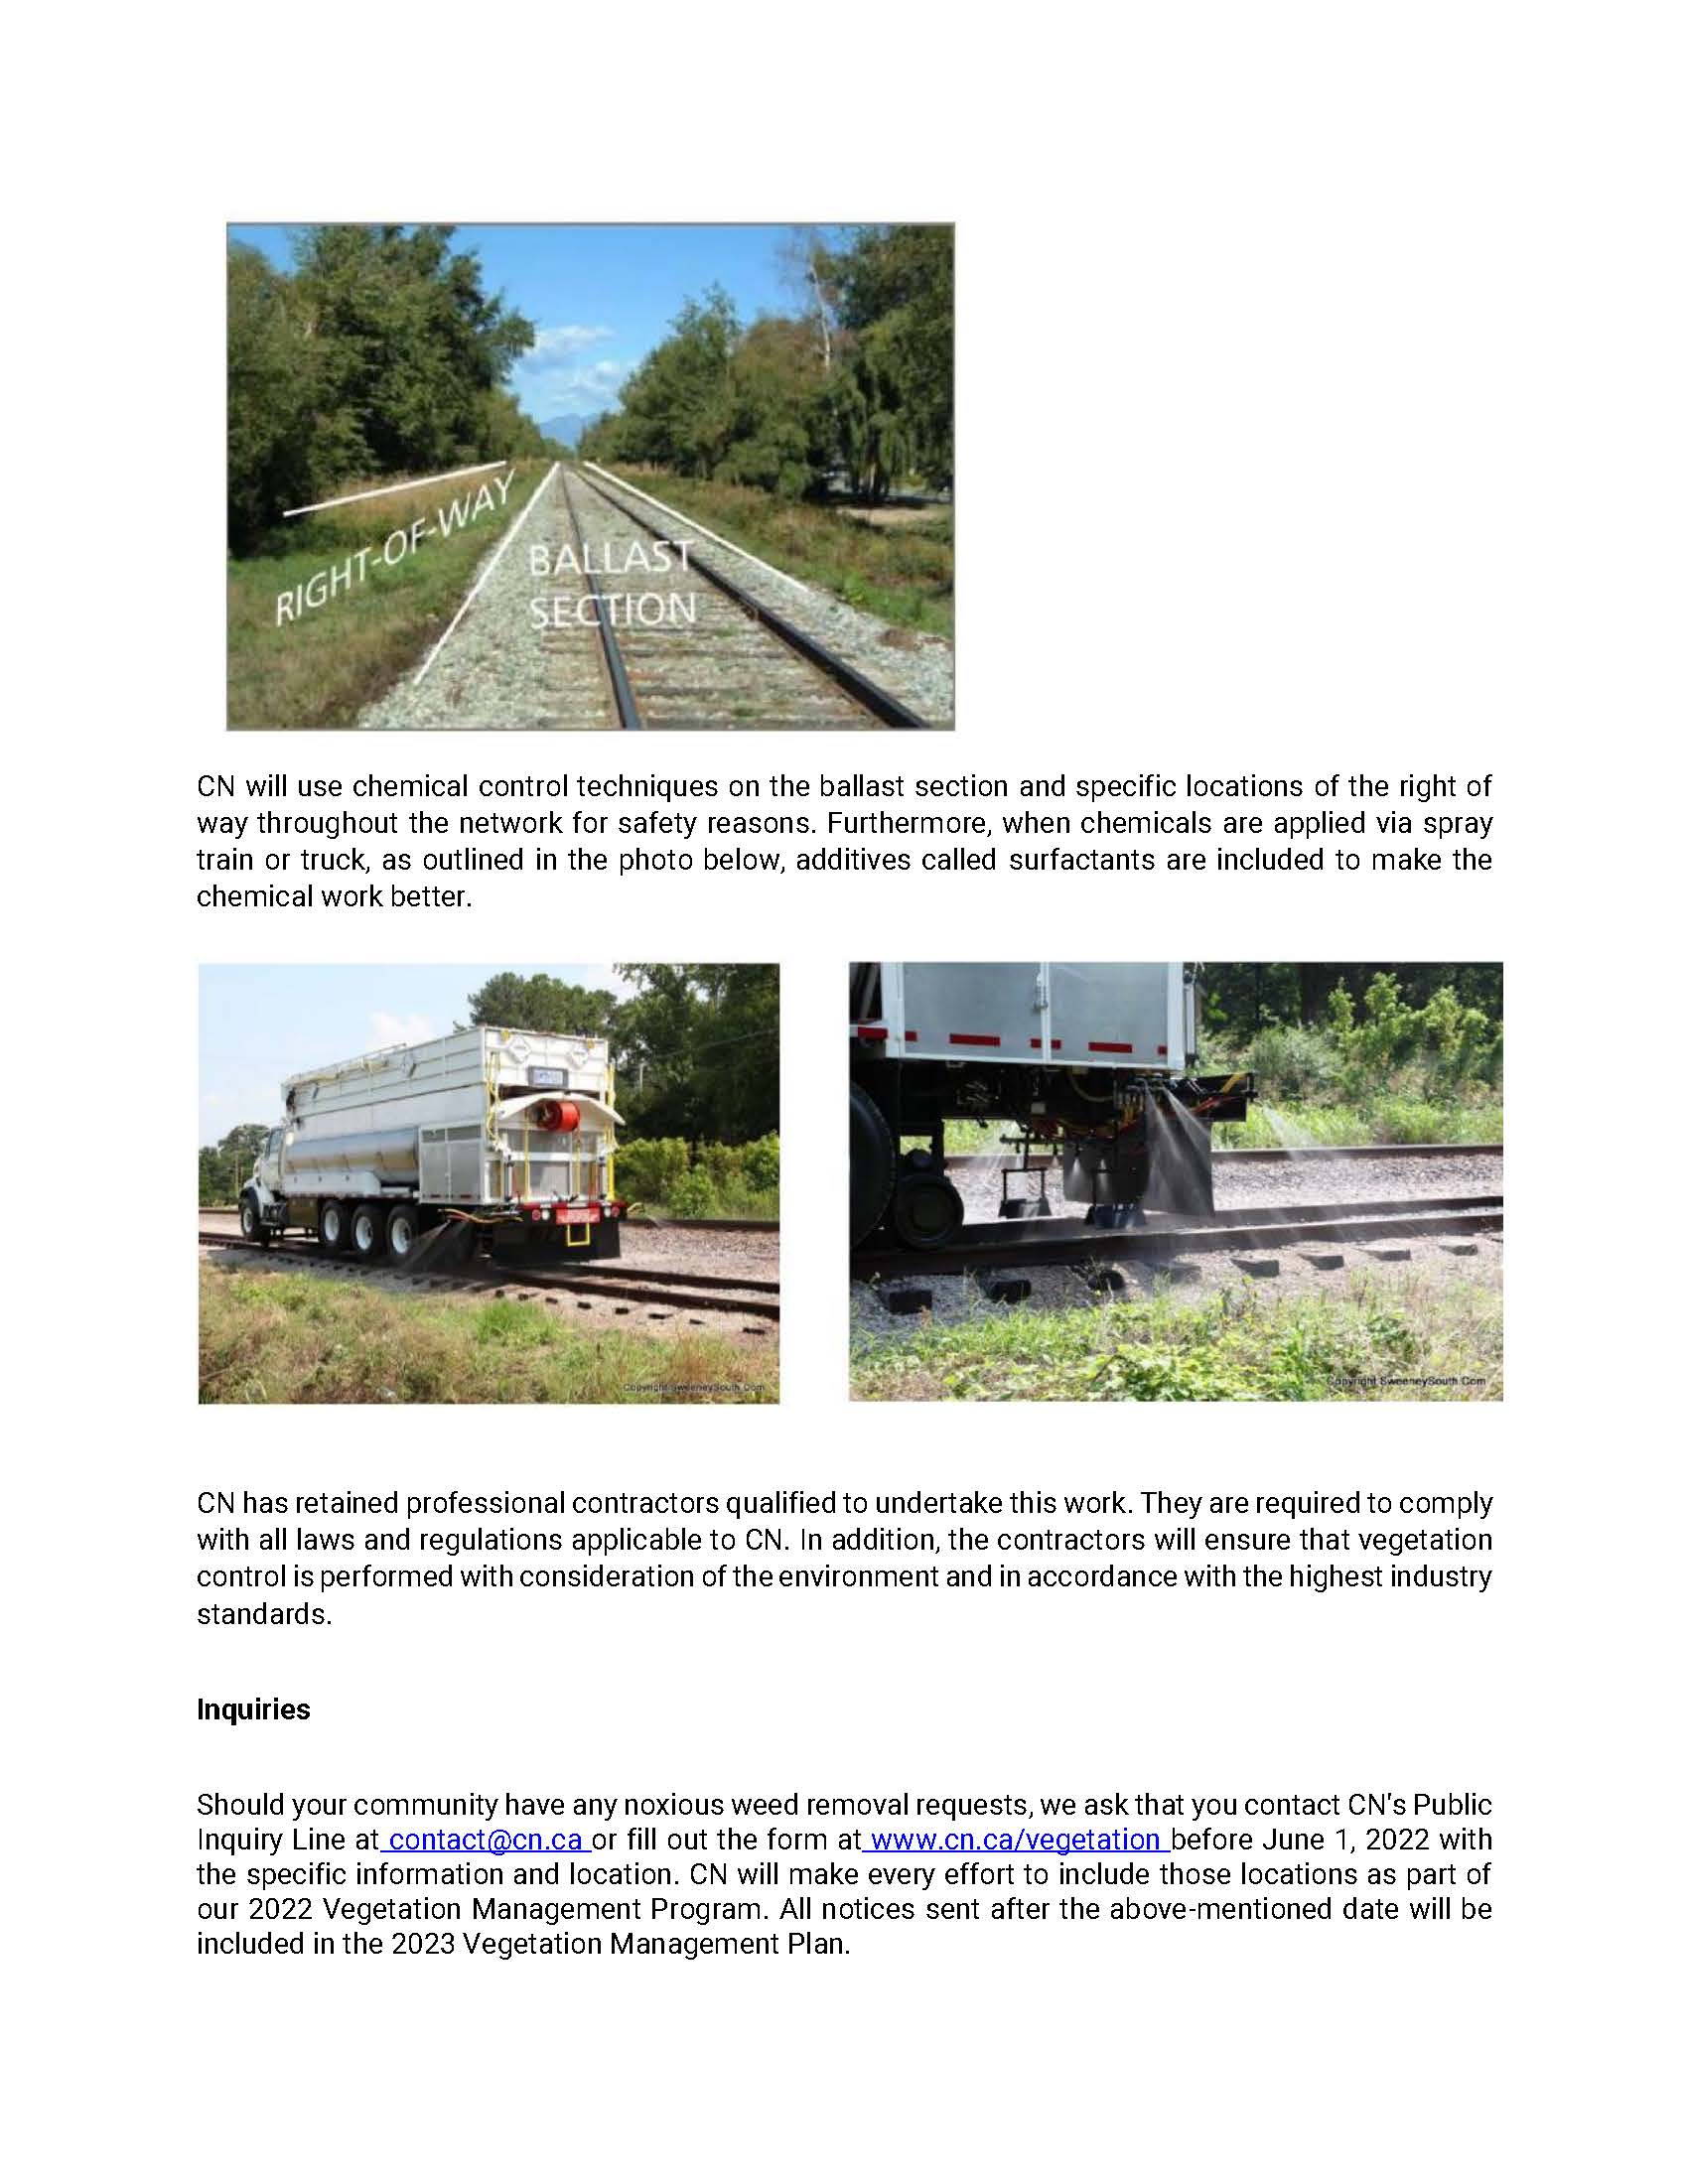 2022 CN vegetation program notice. Page 02